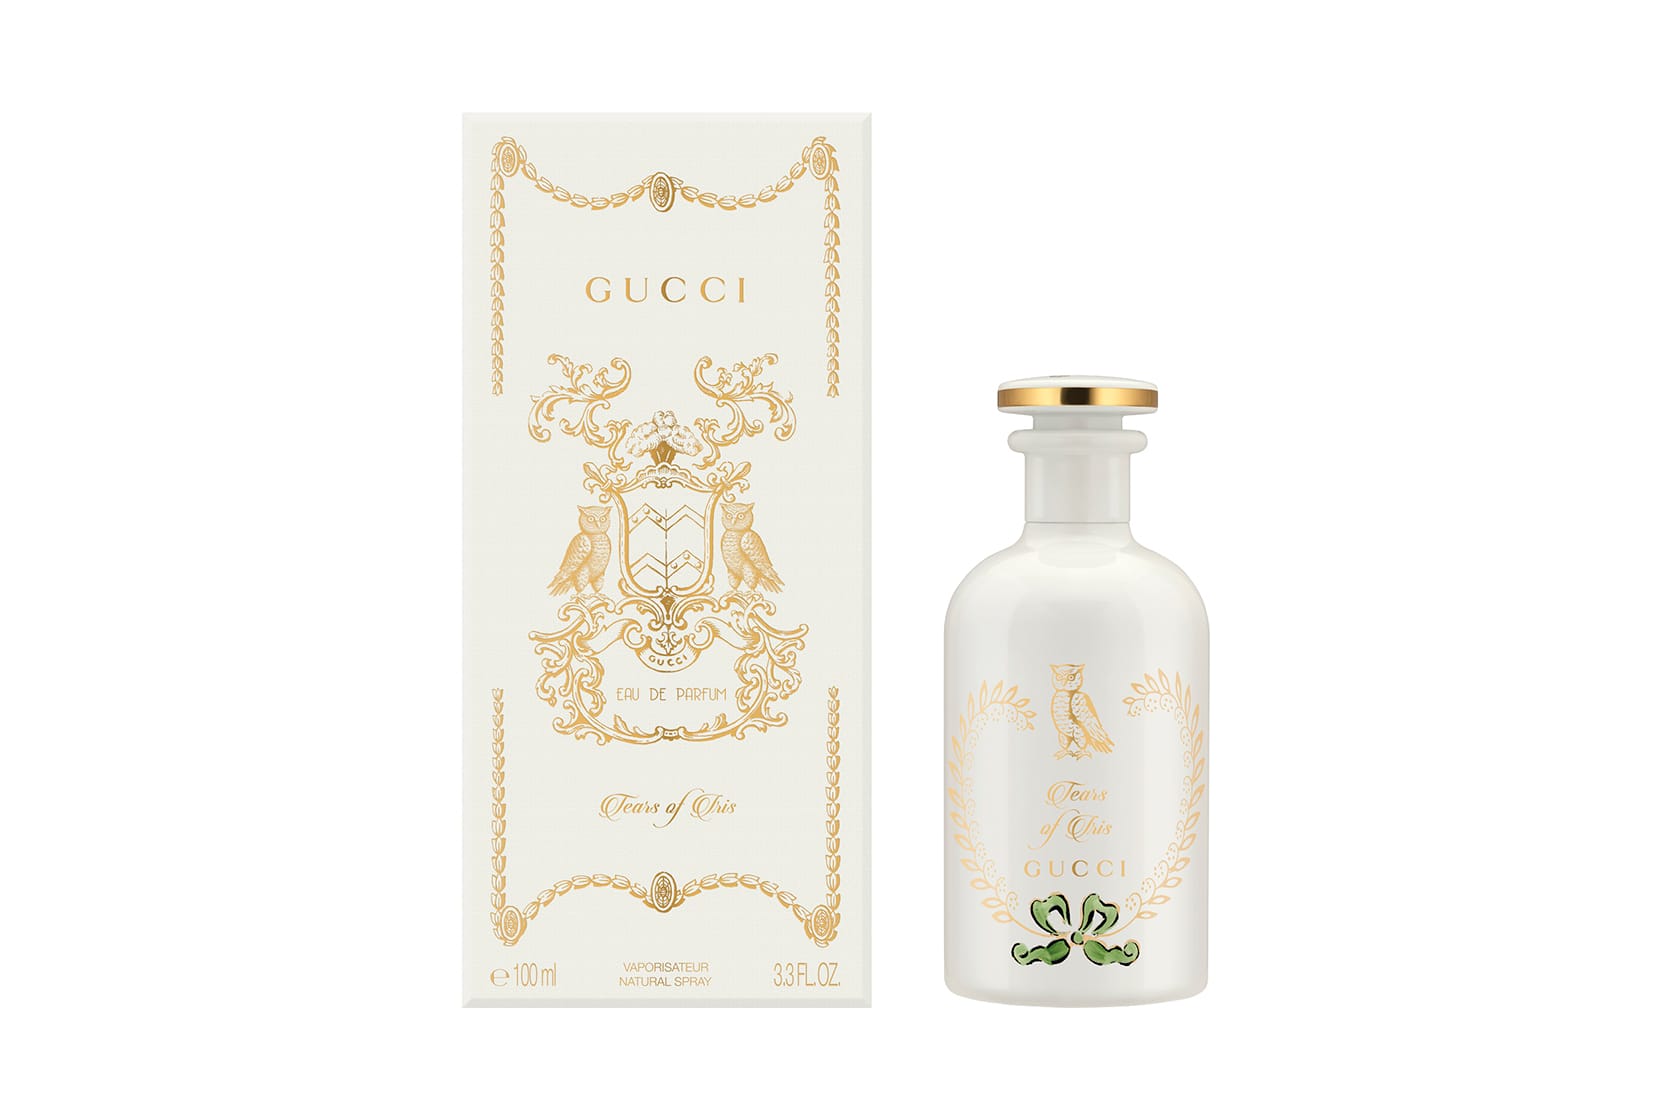 gucci beauty perfume